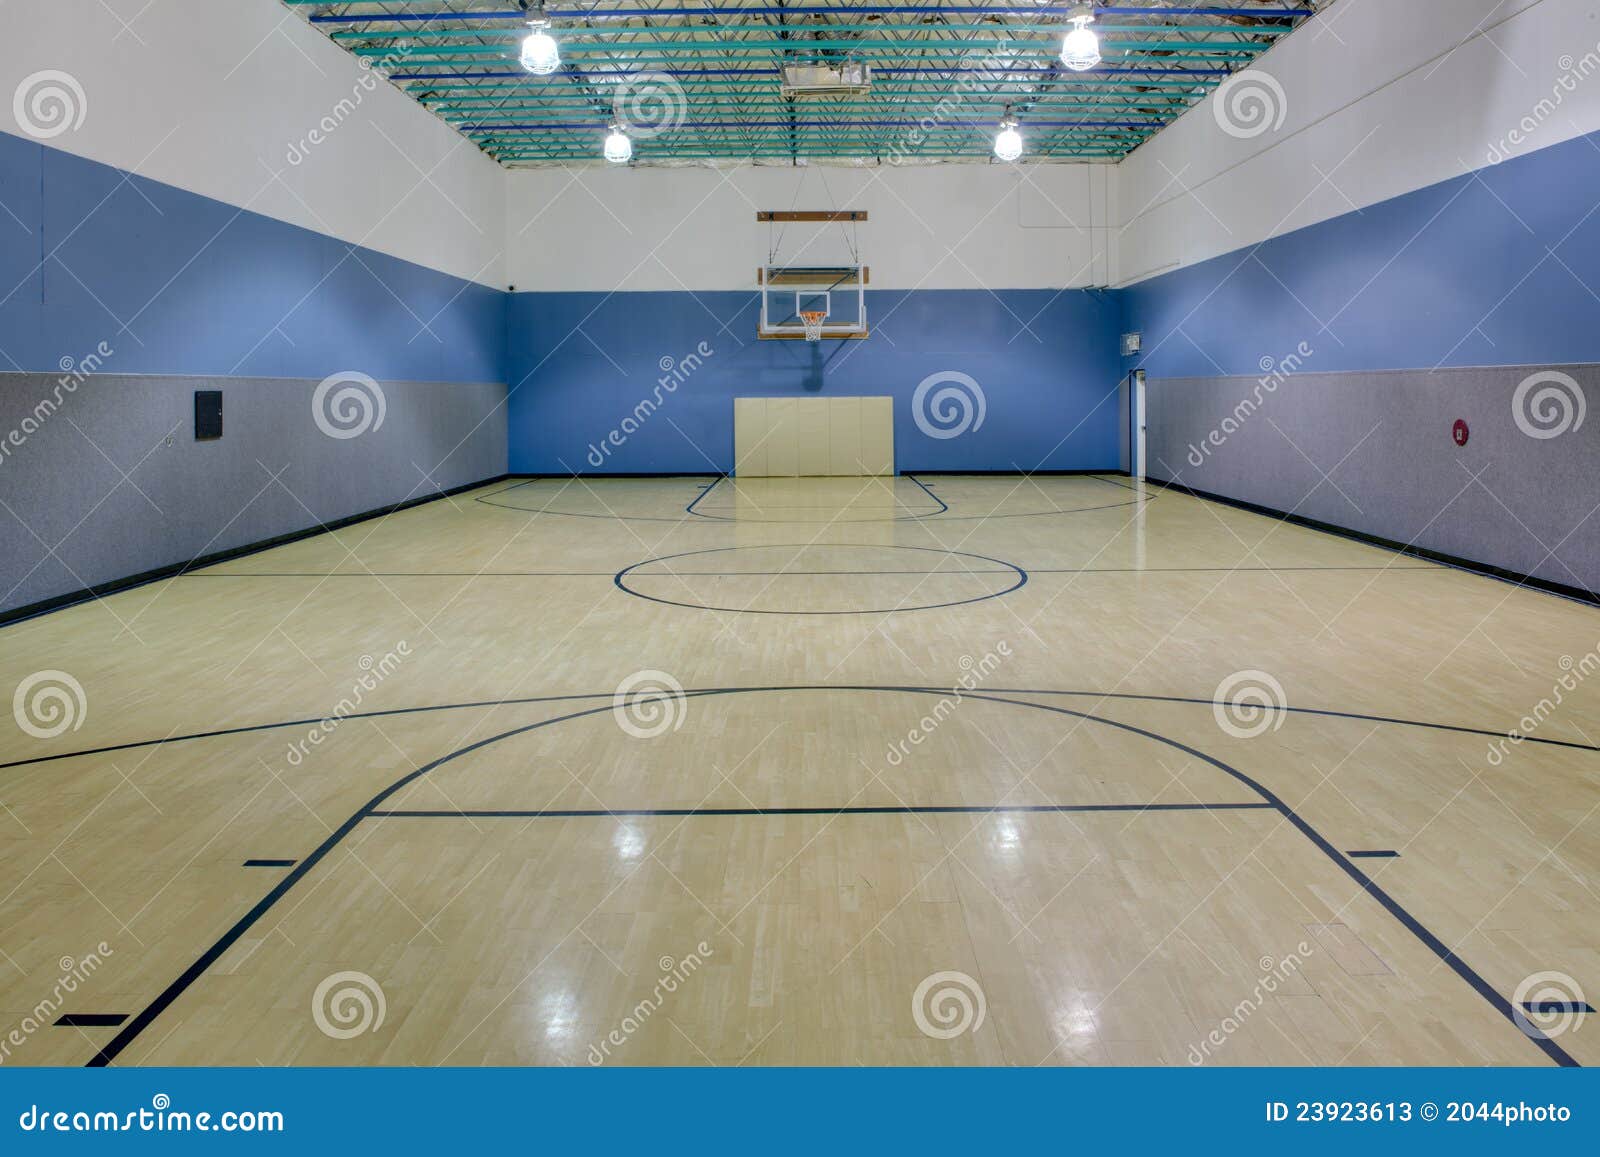 Indoor basketball court stock image. Image of hall, floor - 23923613